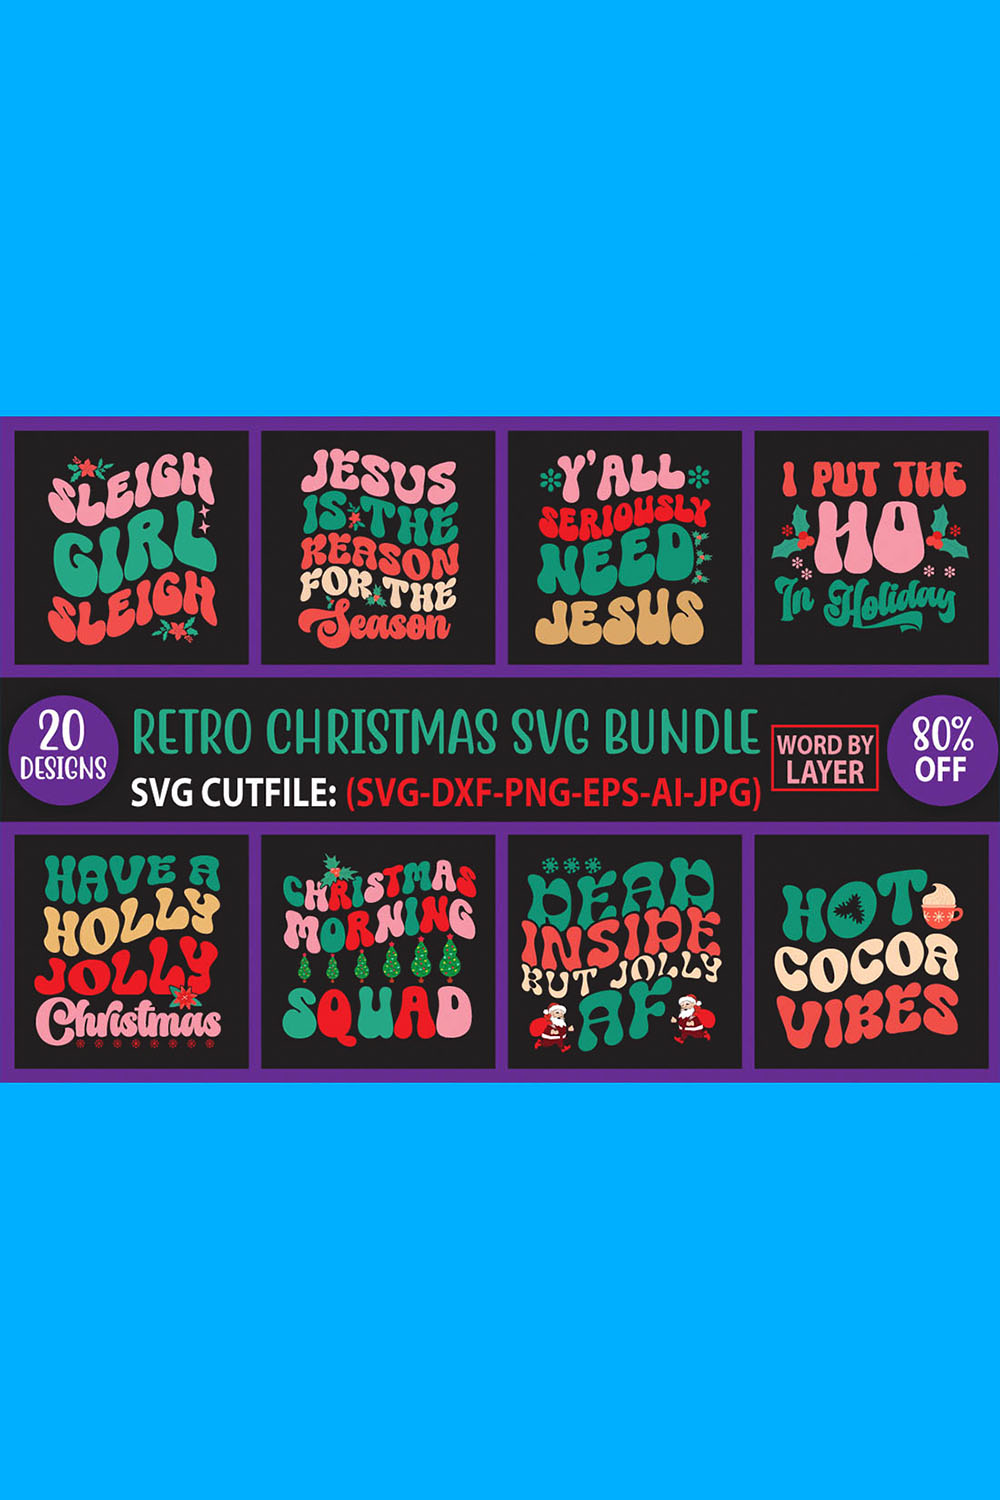 Retro Typography Christmas SVG Bundle pinterest image.